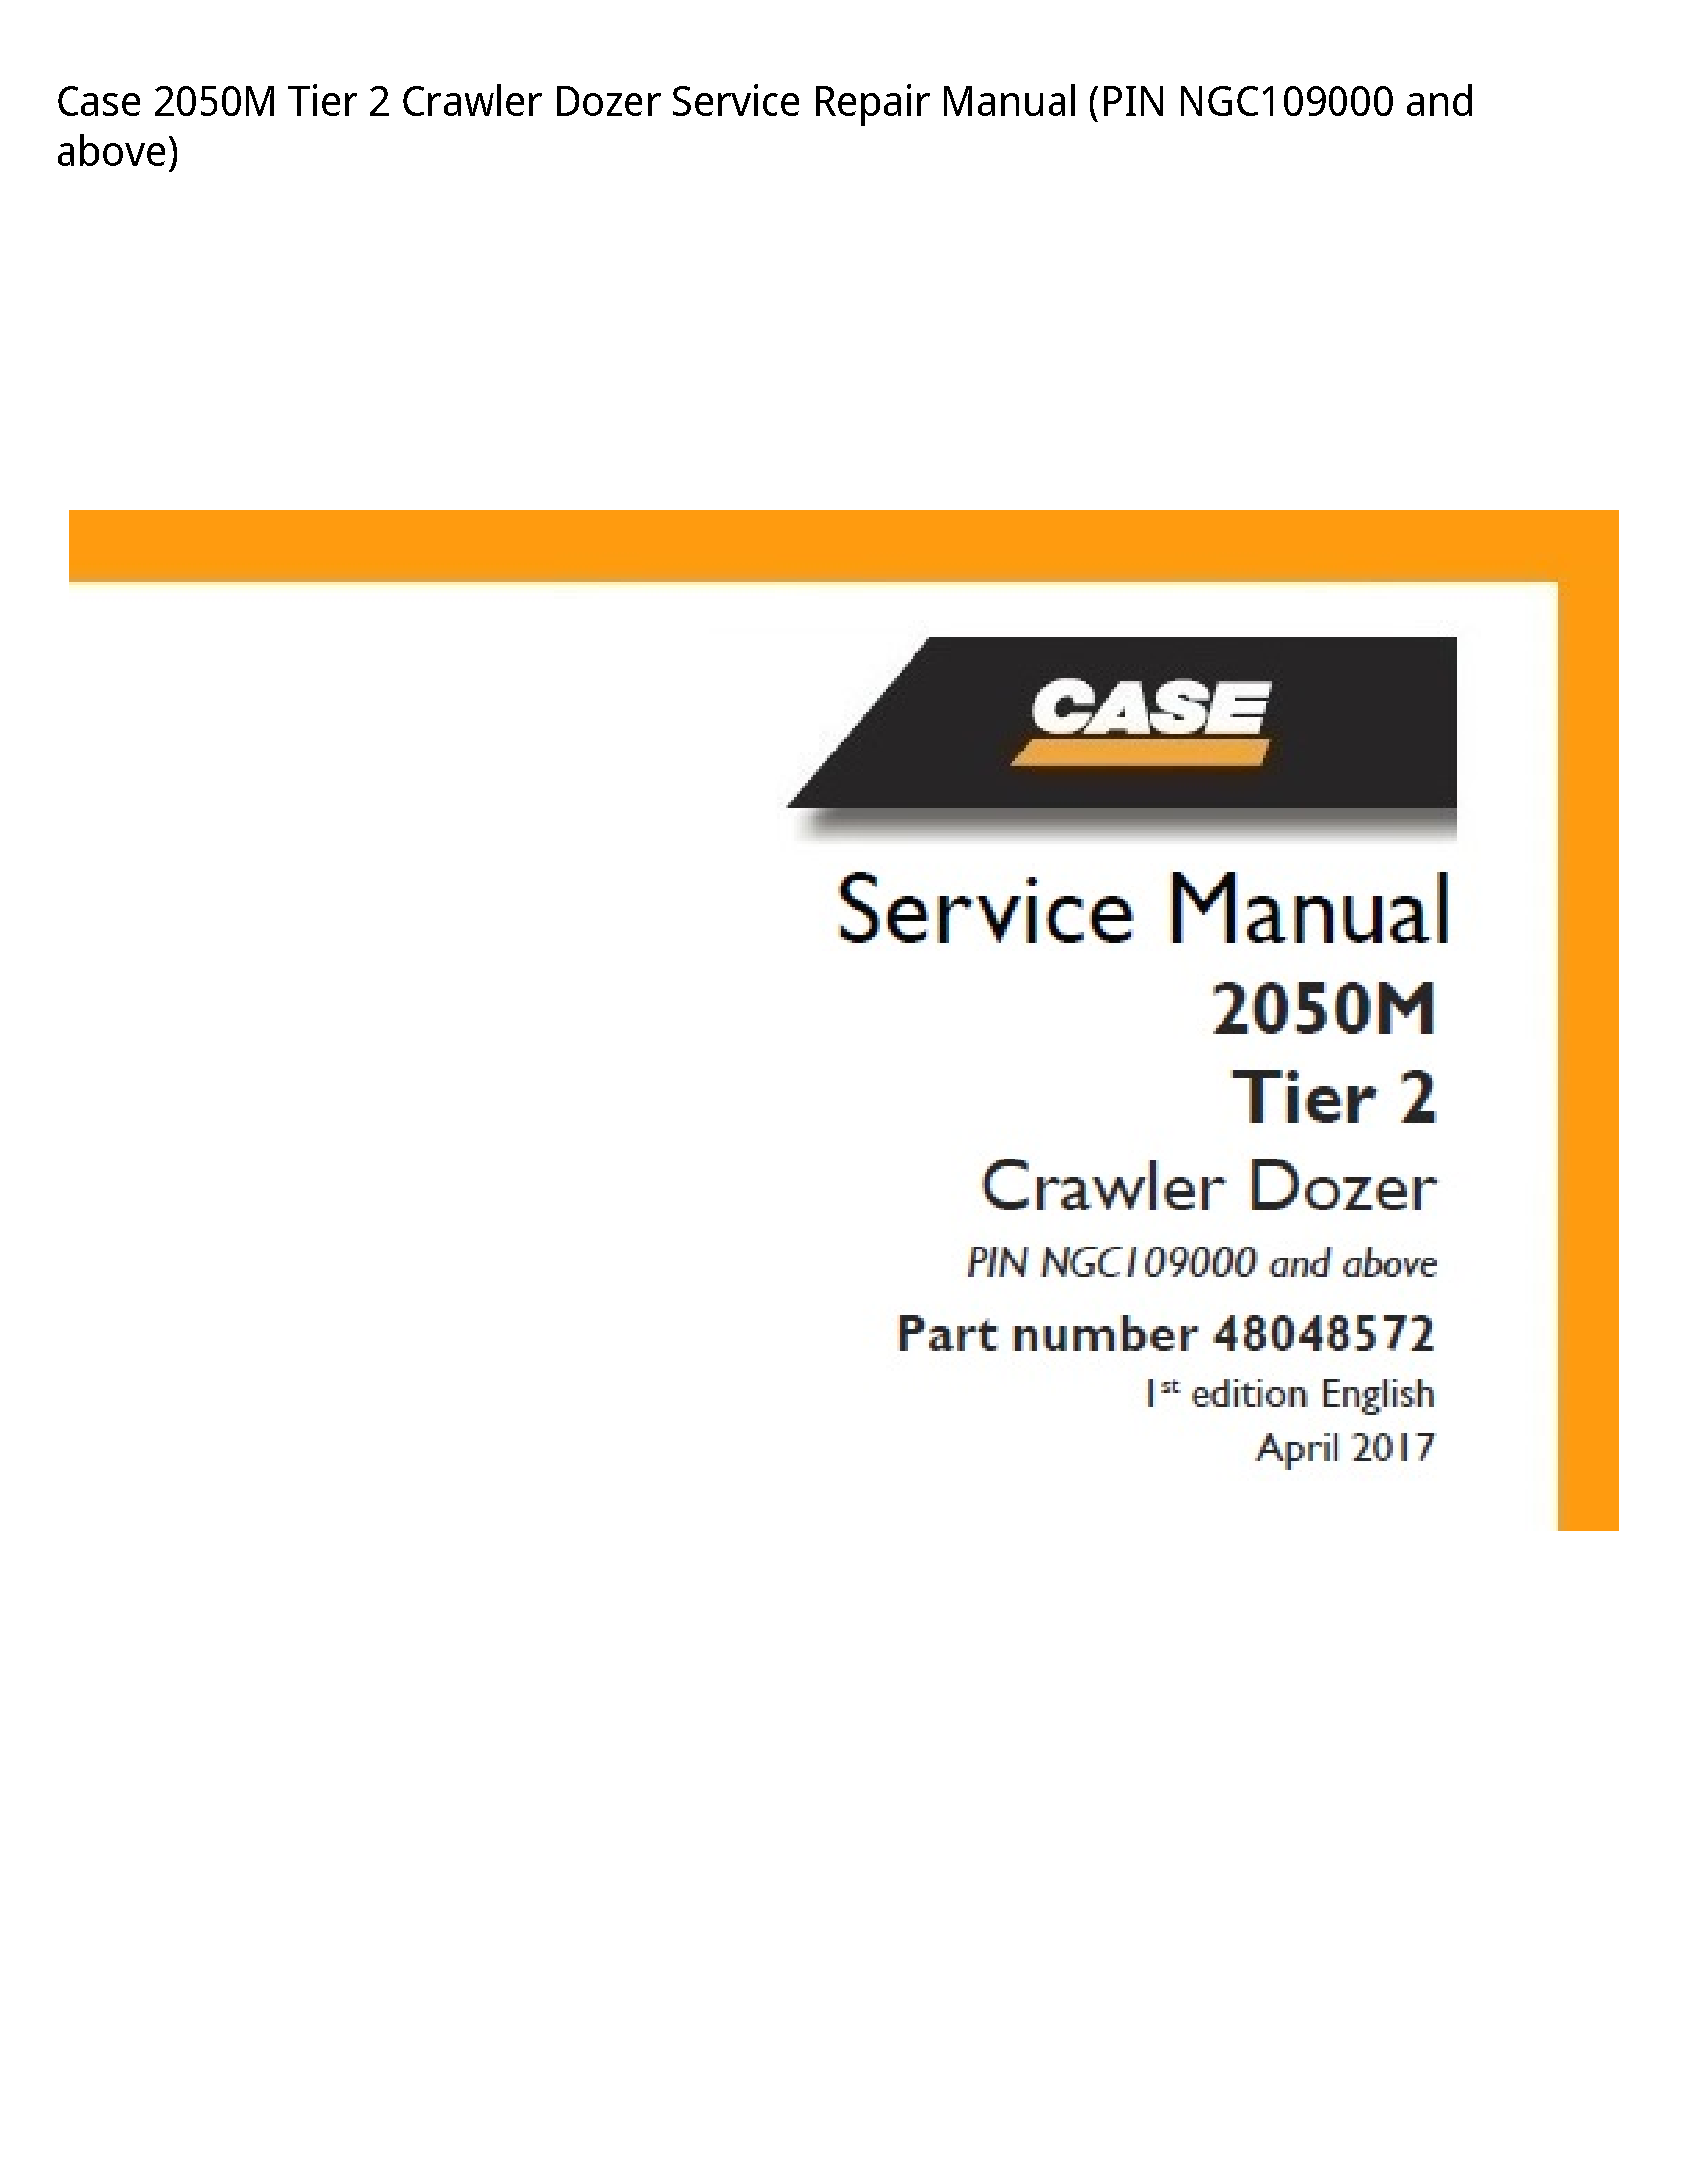 Case/Case IH 2050M Tier Crawler Dozer manual